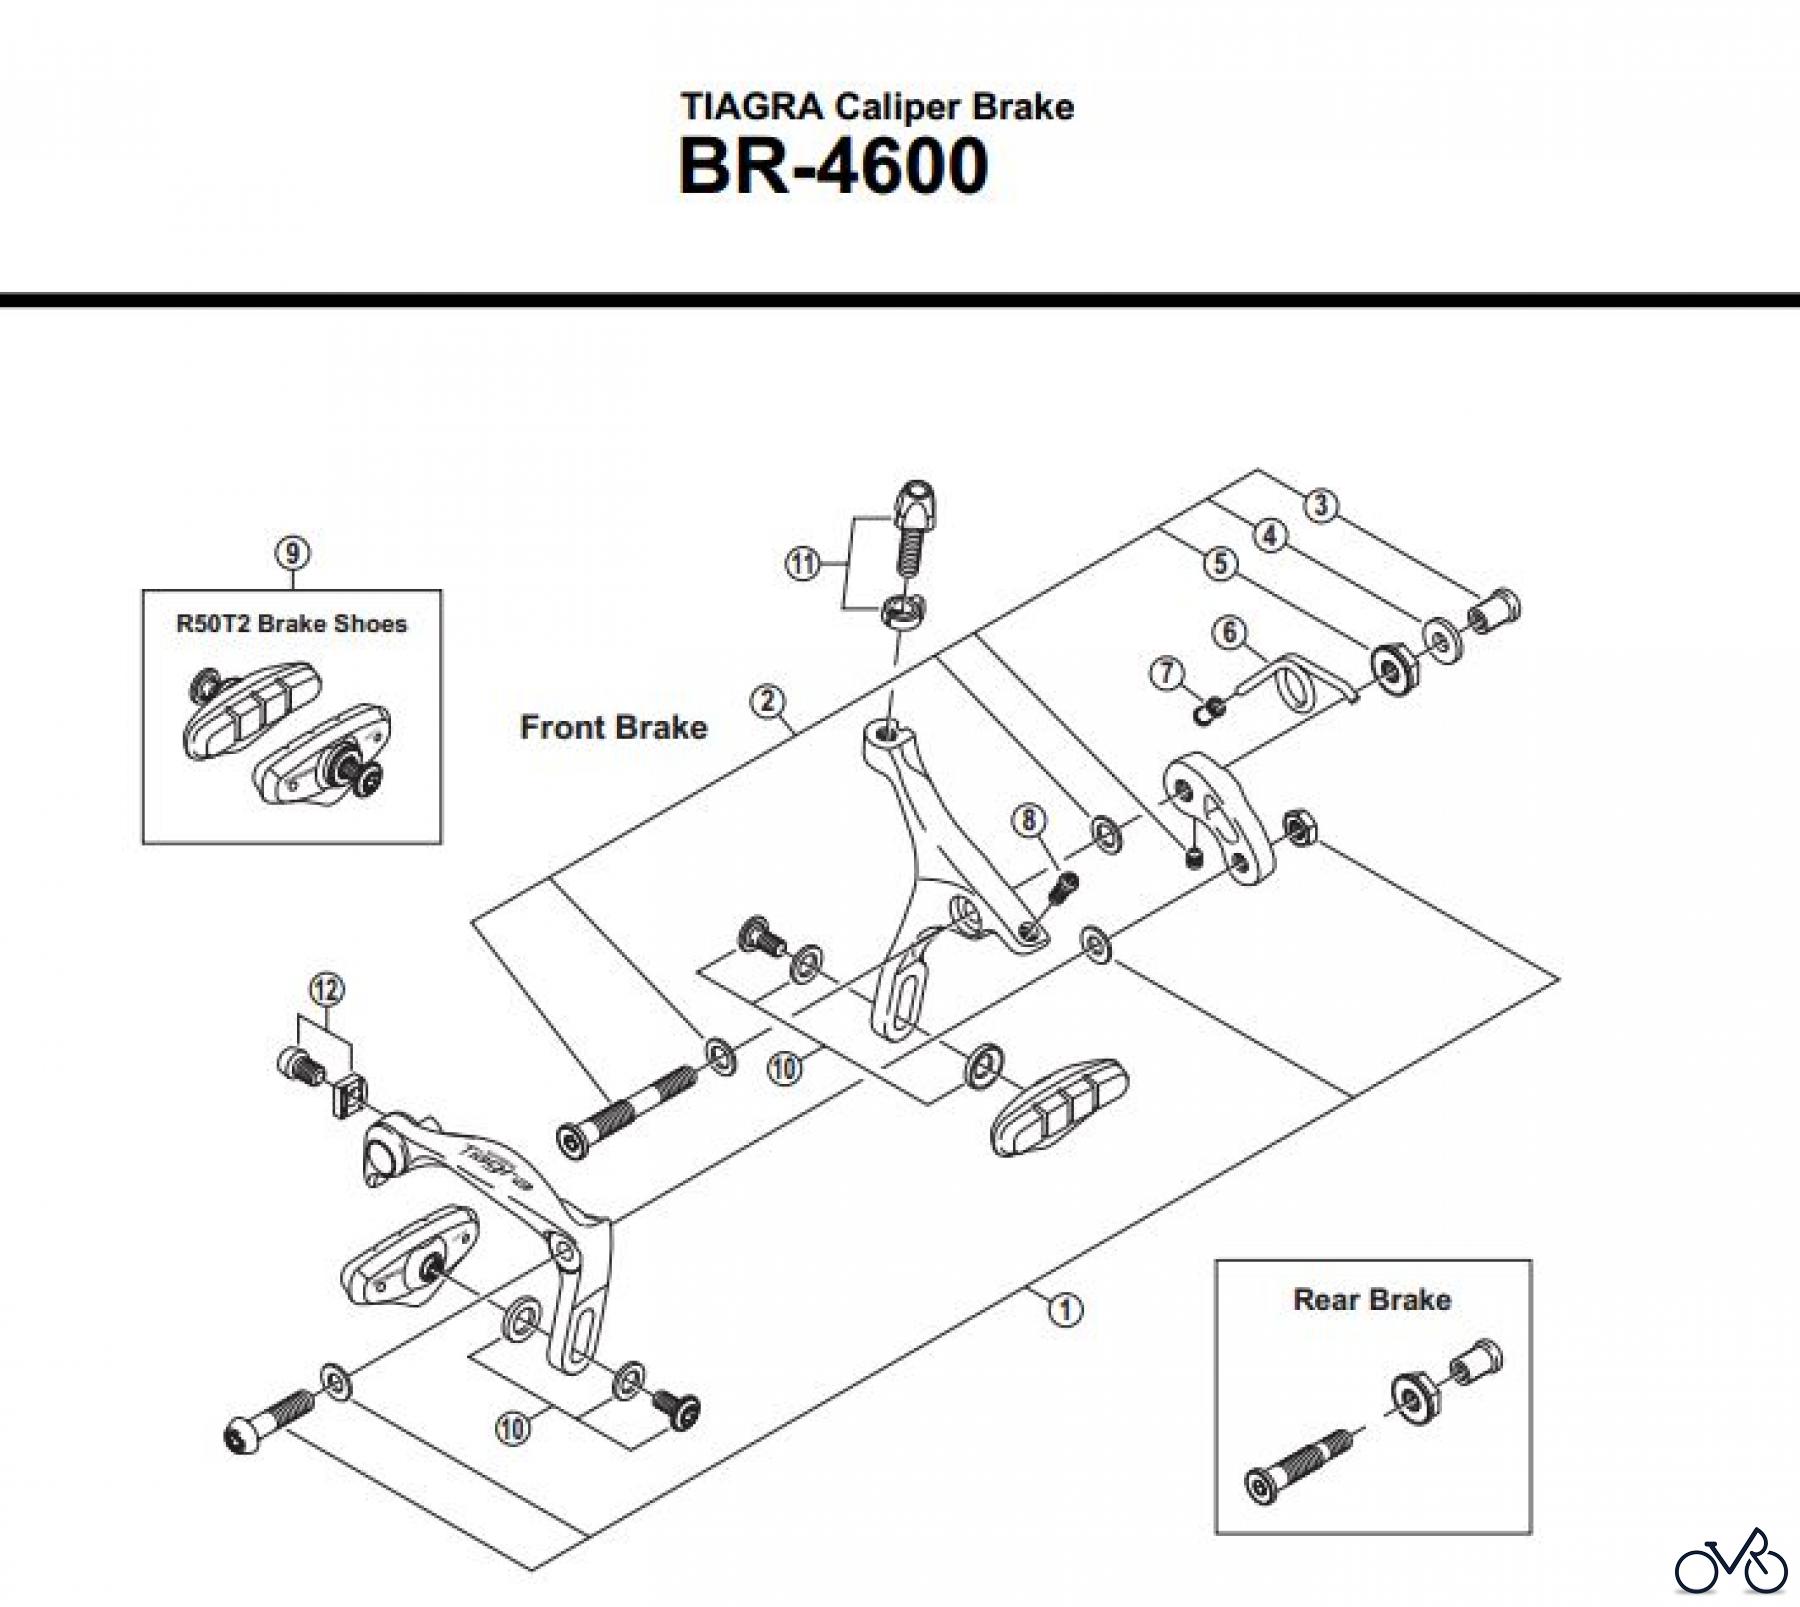  Shimano BR Brake - Bremse BR-4600-3142